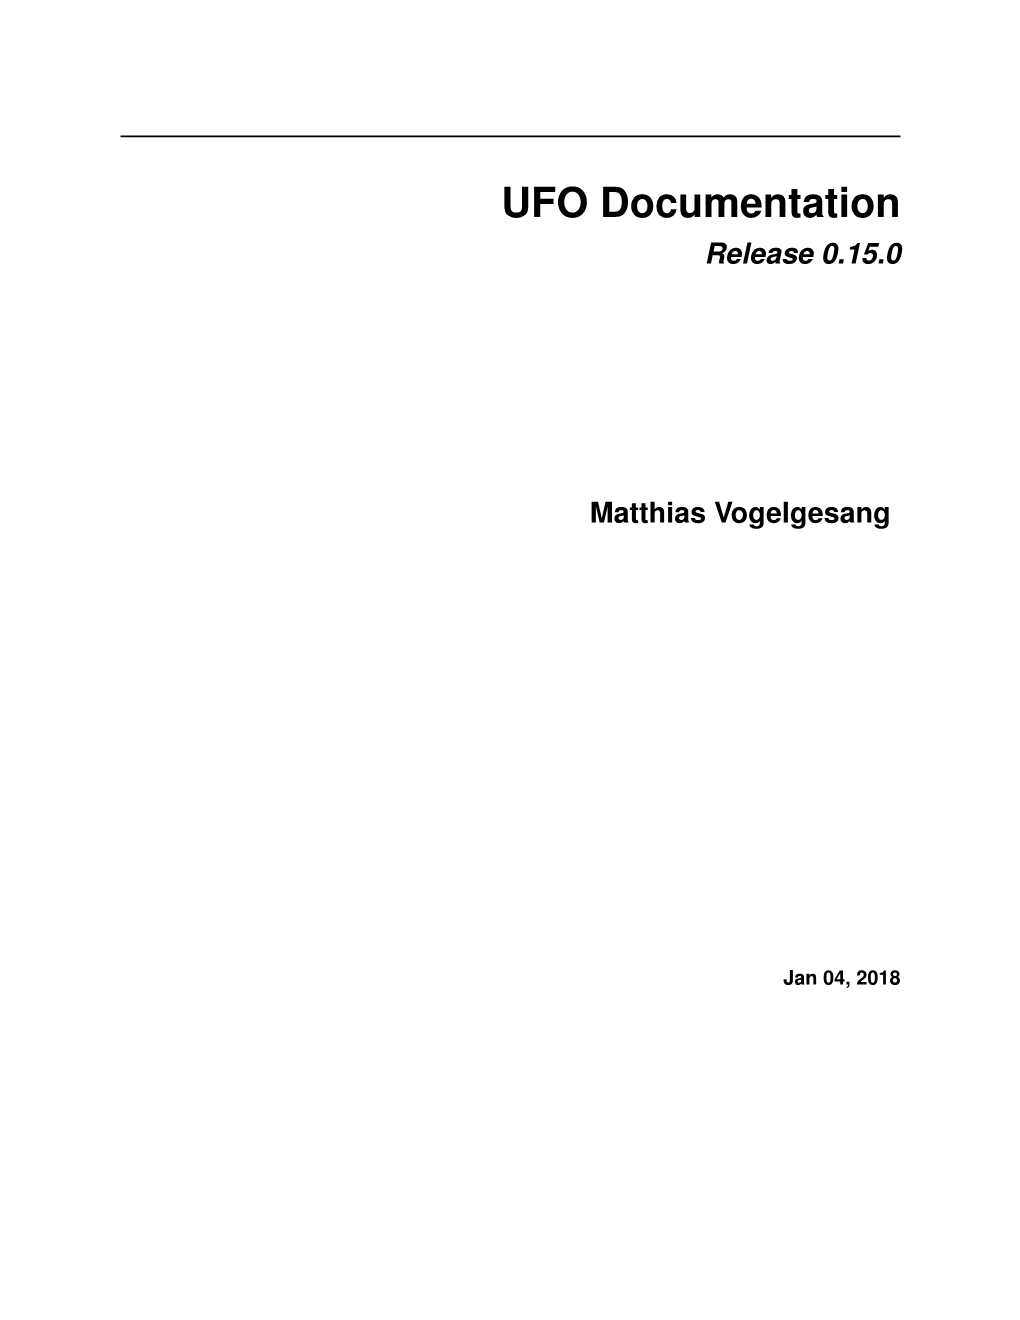 UFO Documentation Release 0.15.0 Matthias Vogelgesang